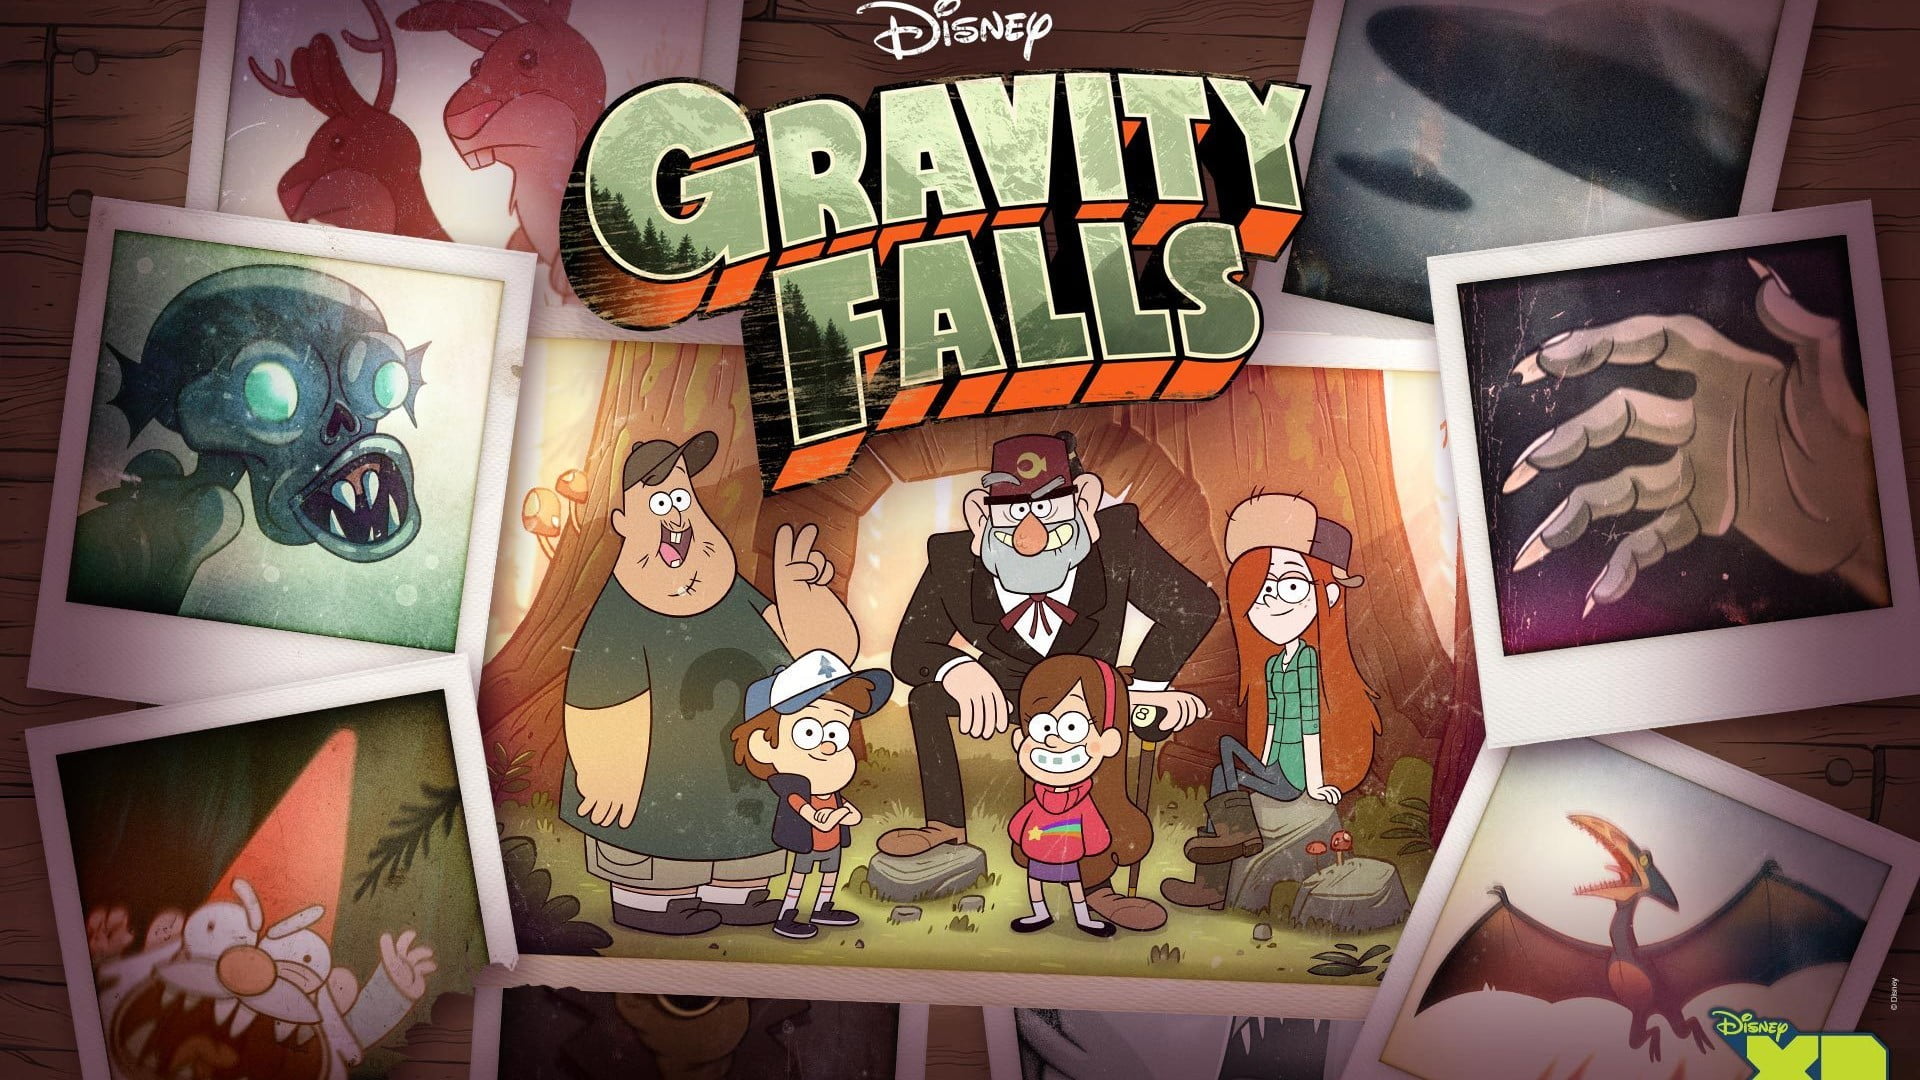 Disney Gravity Falls illustration